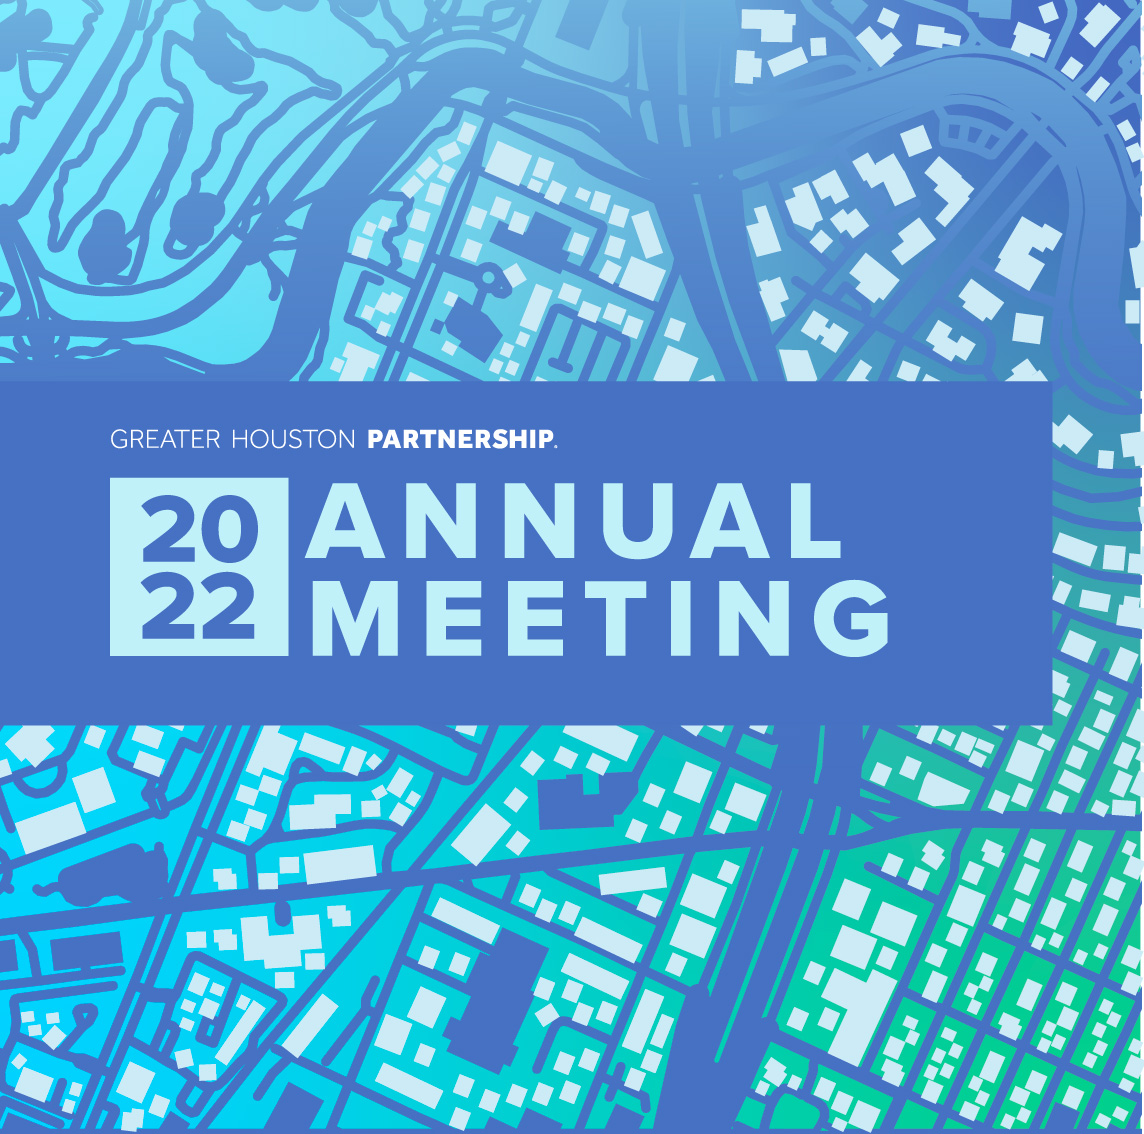 Telugu Calendar 2022 Houston Partnership Week: 2022 Annual Meeting | Houston.org